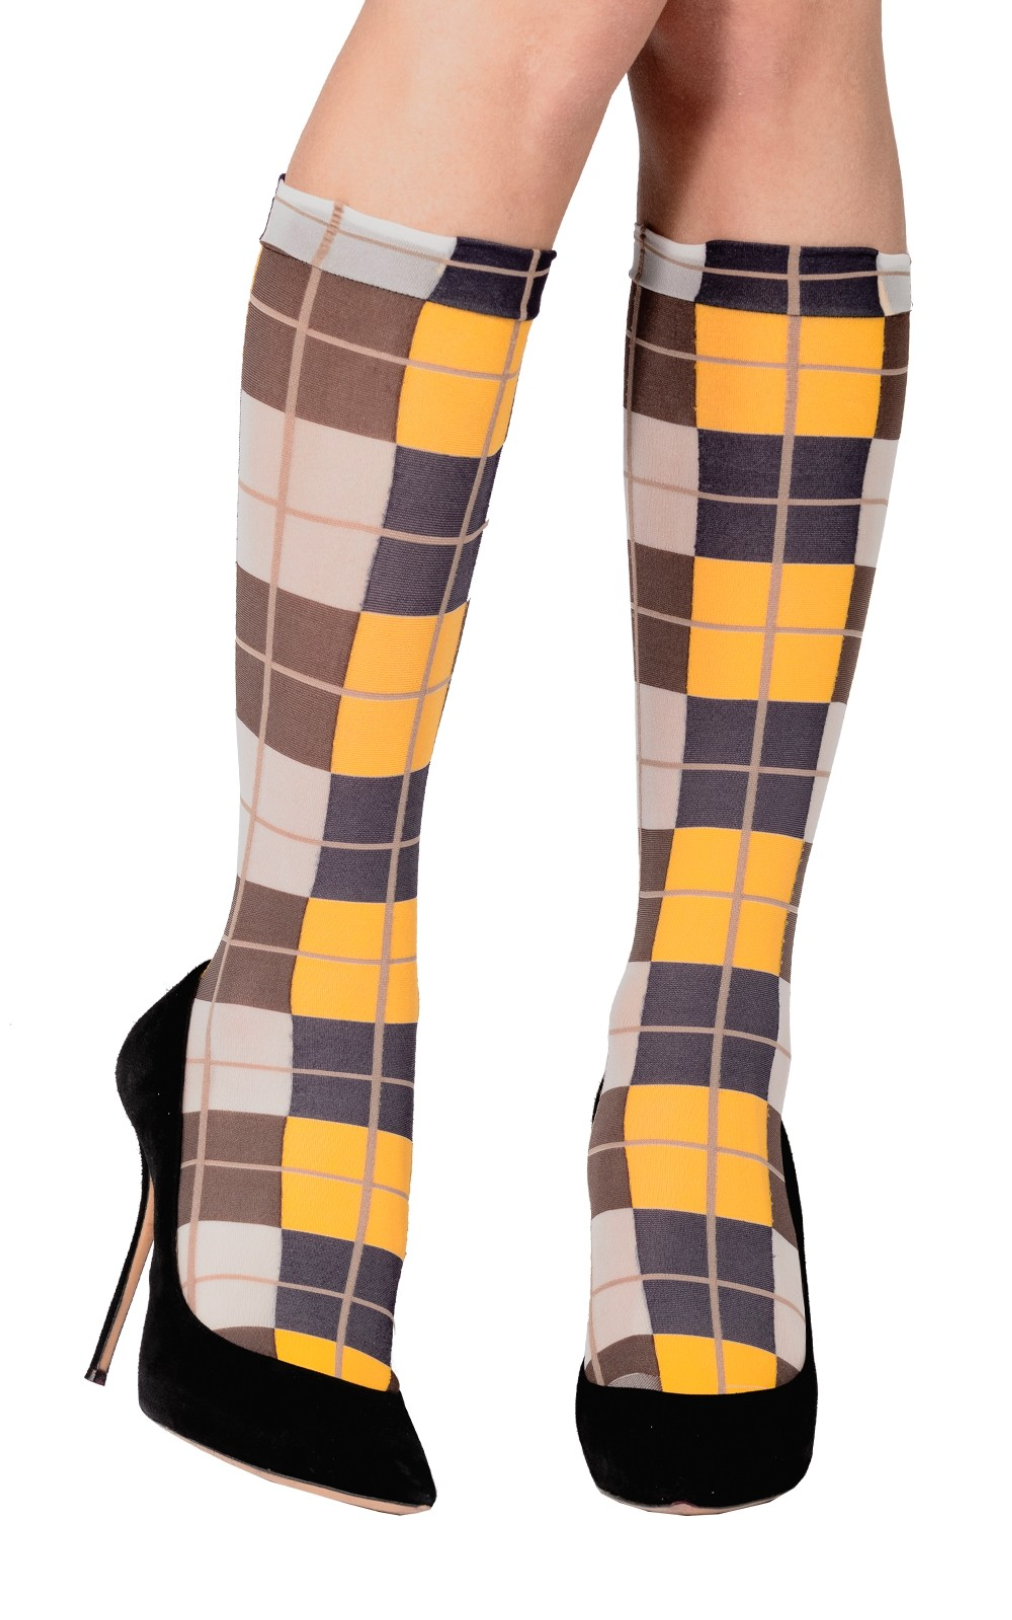 Emilio Cavallini Classic Tartan Knee-high socks - Mustard, brown, white and navy fashion knee-high socks with a woven square tartan style pattern.